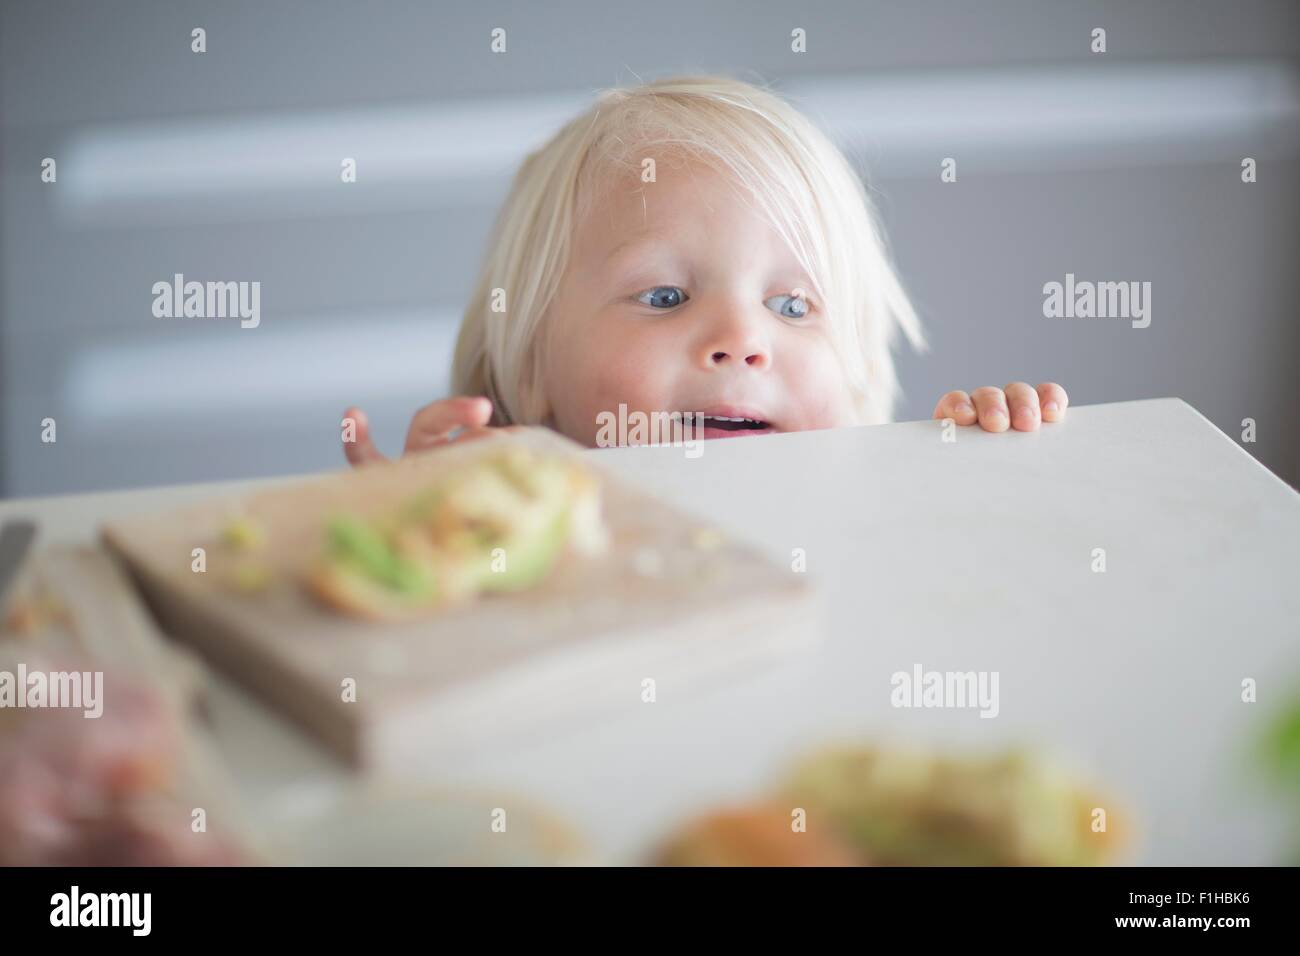 https://c8.alamy.com/comp/F1HBK6/boy-peeking-over-kitchen-counter-F1HBK6.jpg